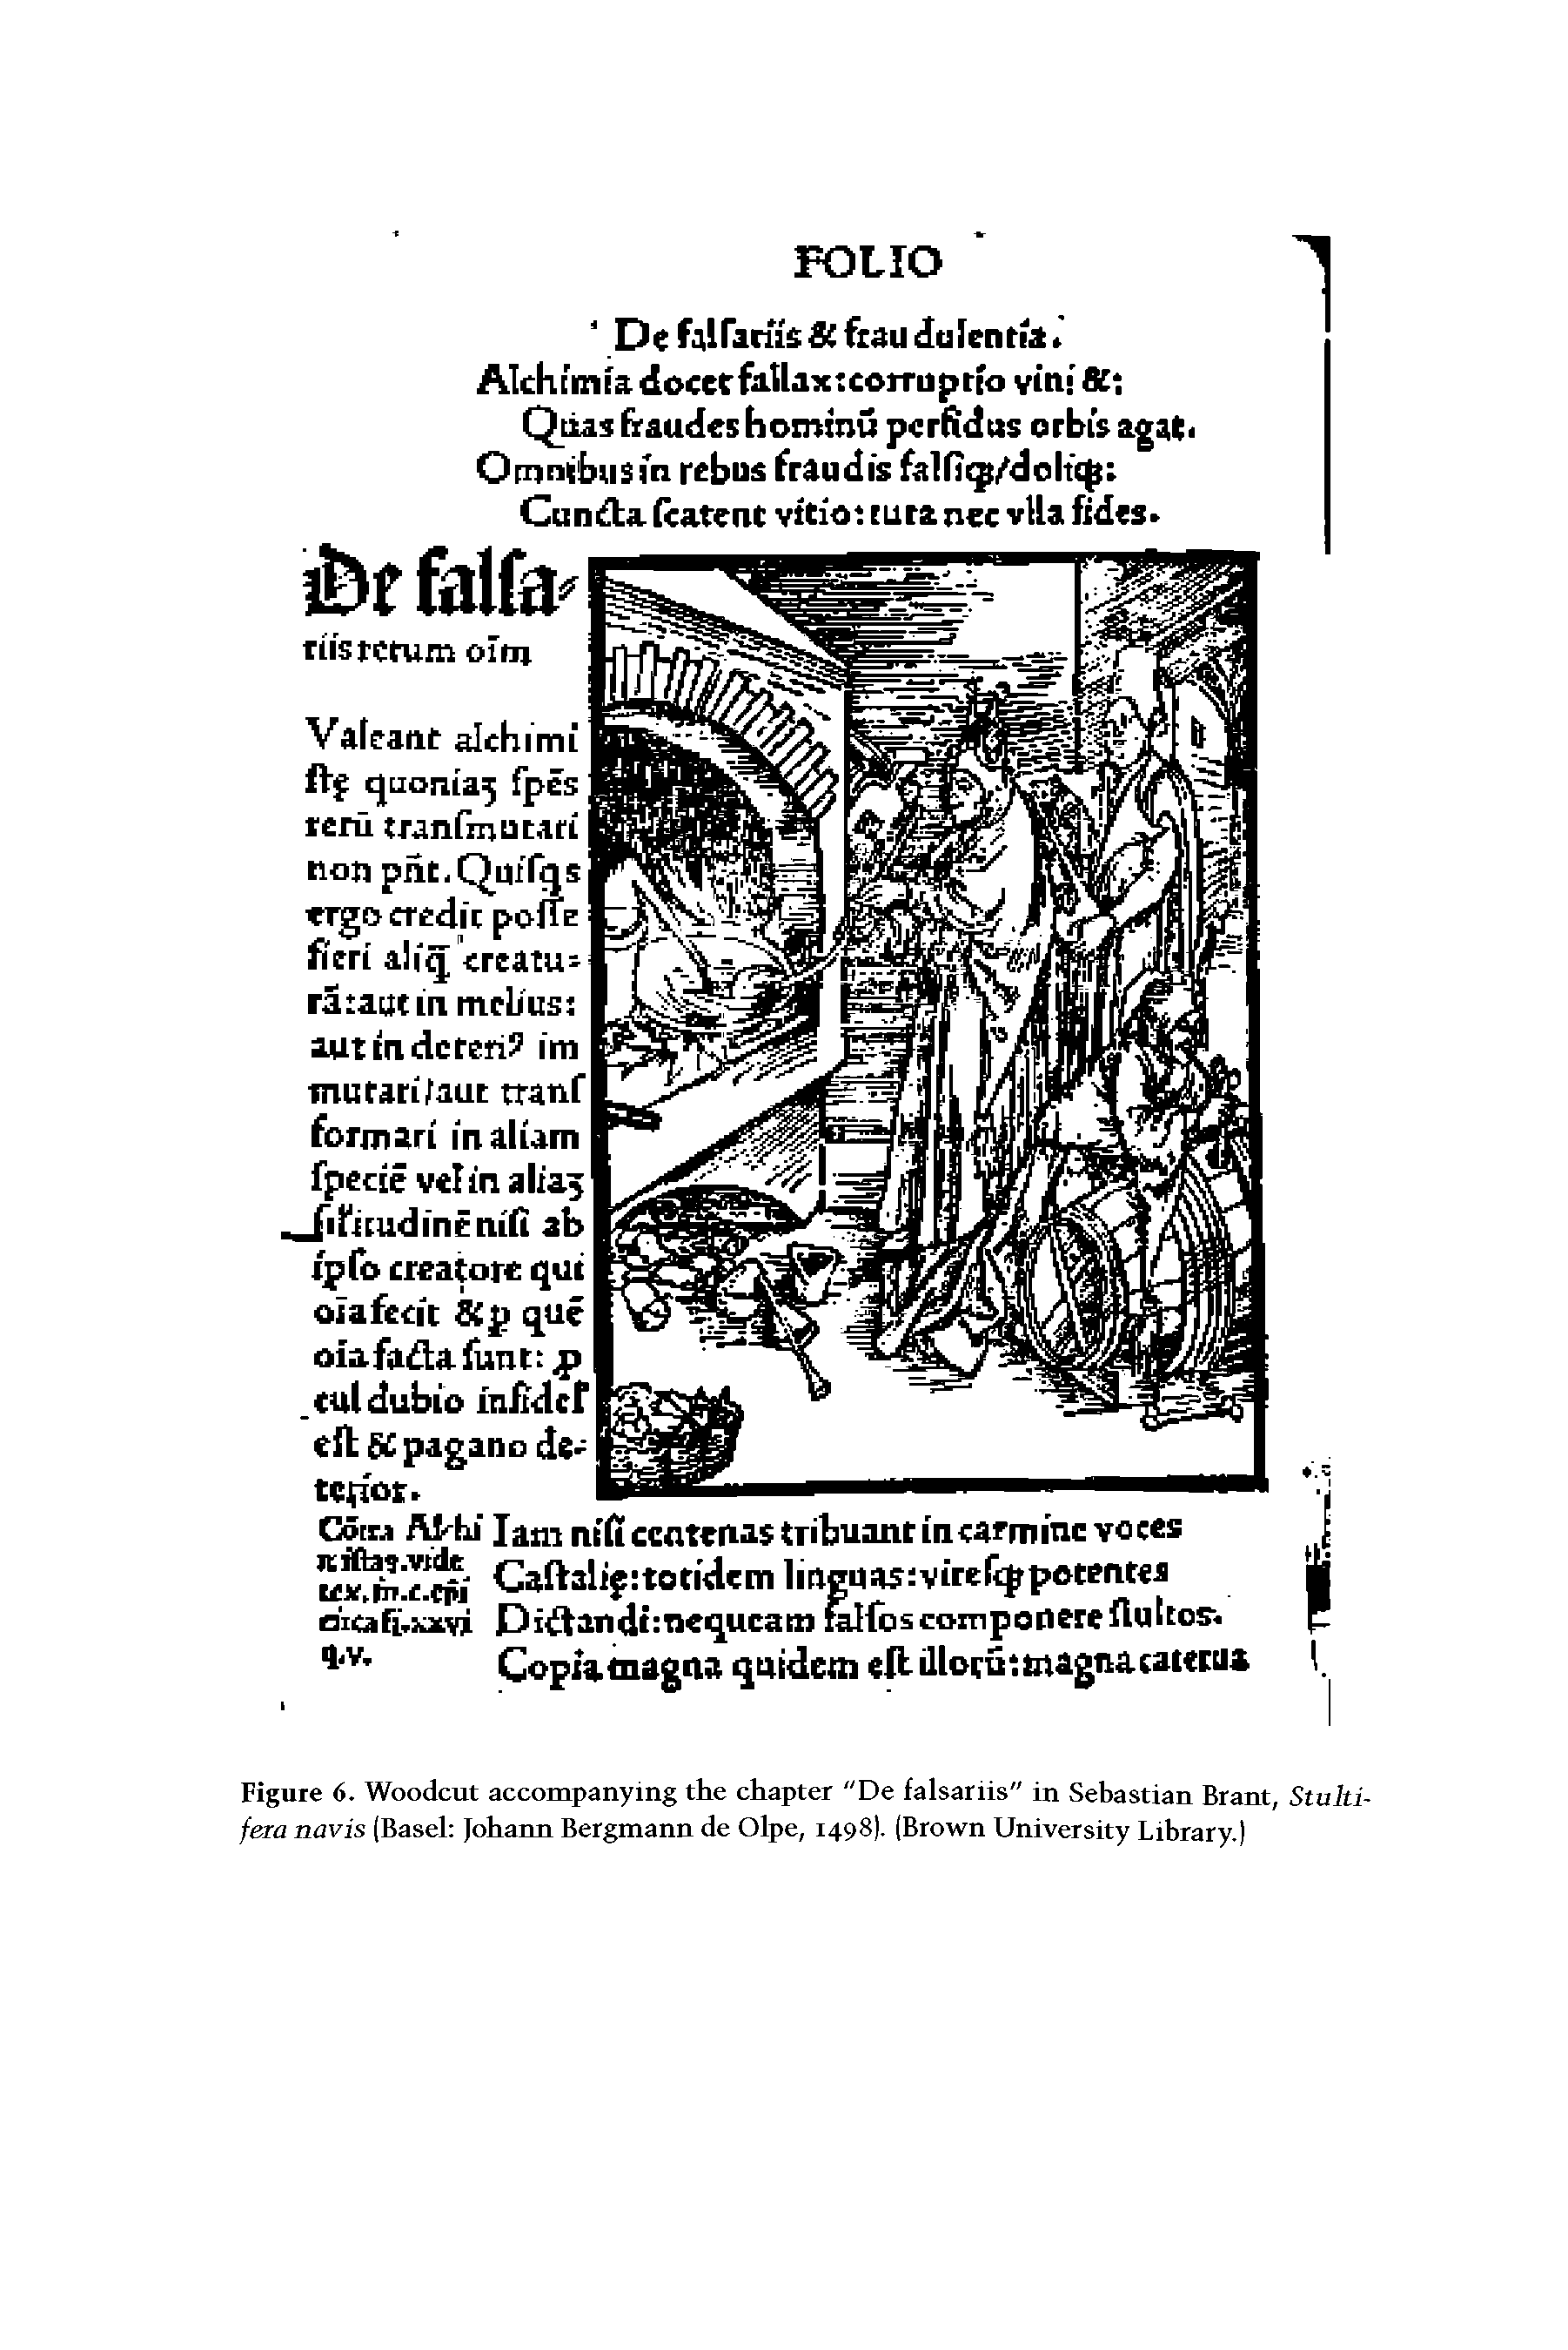 Figure 6. Woodcut accompanying the chapter "De falsariis" in Sebastian Brant, Stulti-fera navis (Basel Johann Bergmann de Olpe, 1498). (Brown University Library.)...